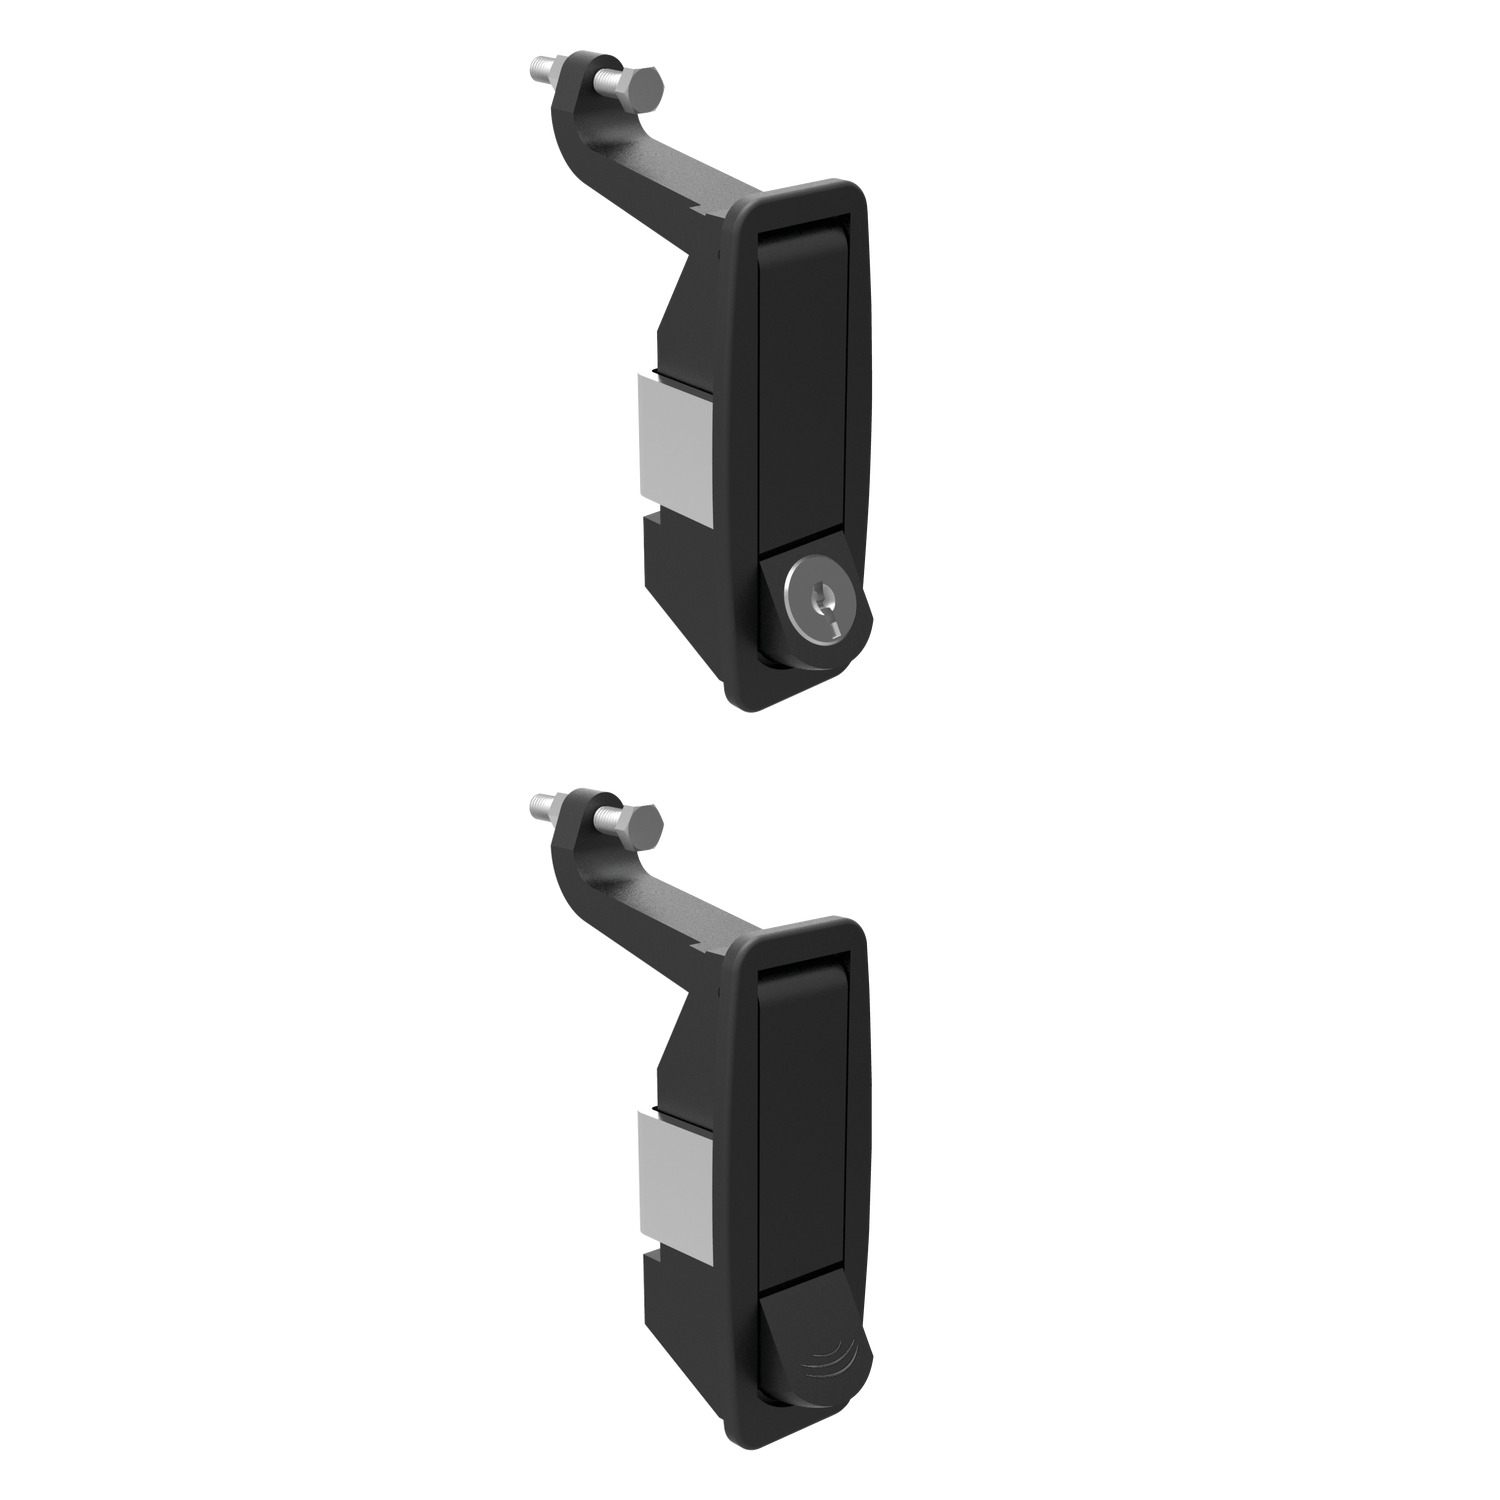 A1707.AW0910 Compression Locks Lever latch - adjustable grip - raised trigger - zinc. Black coated - Std. Cylinder - Keyed Alike - 17 to 40 mm grip